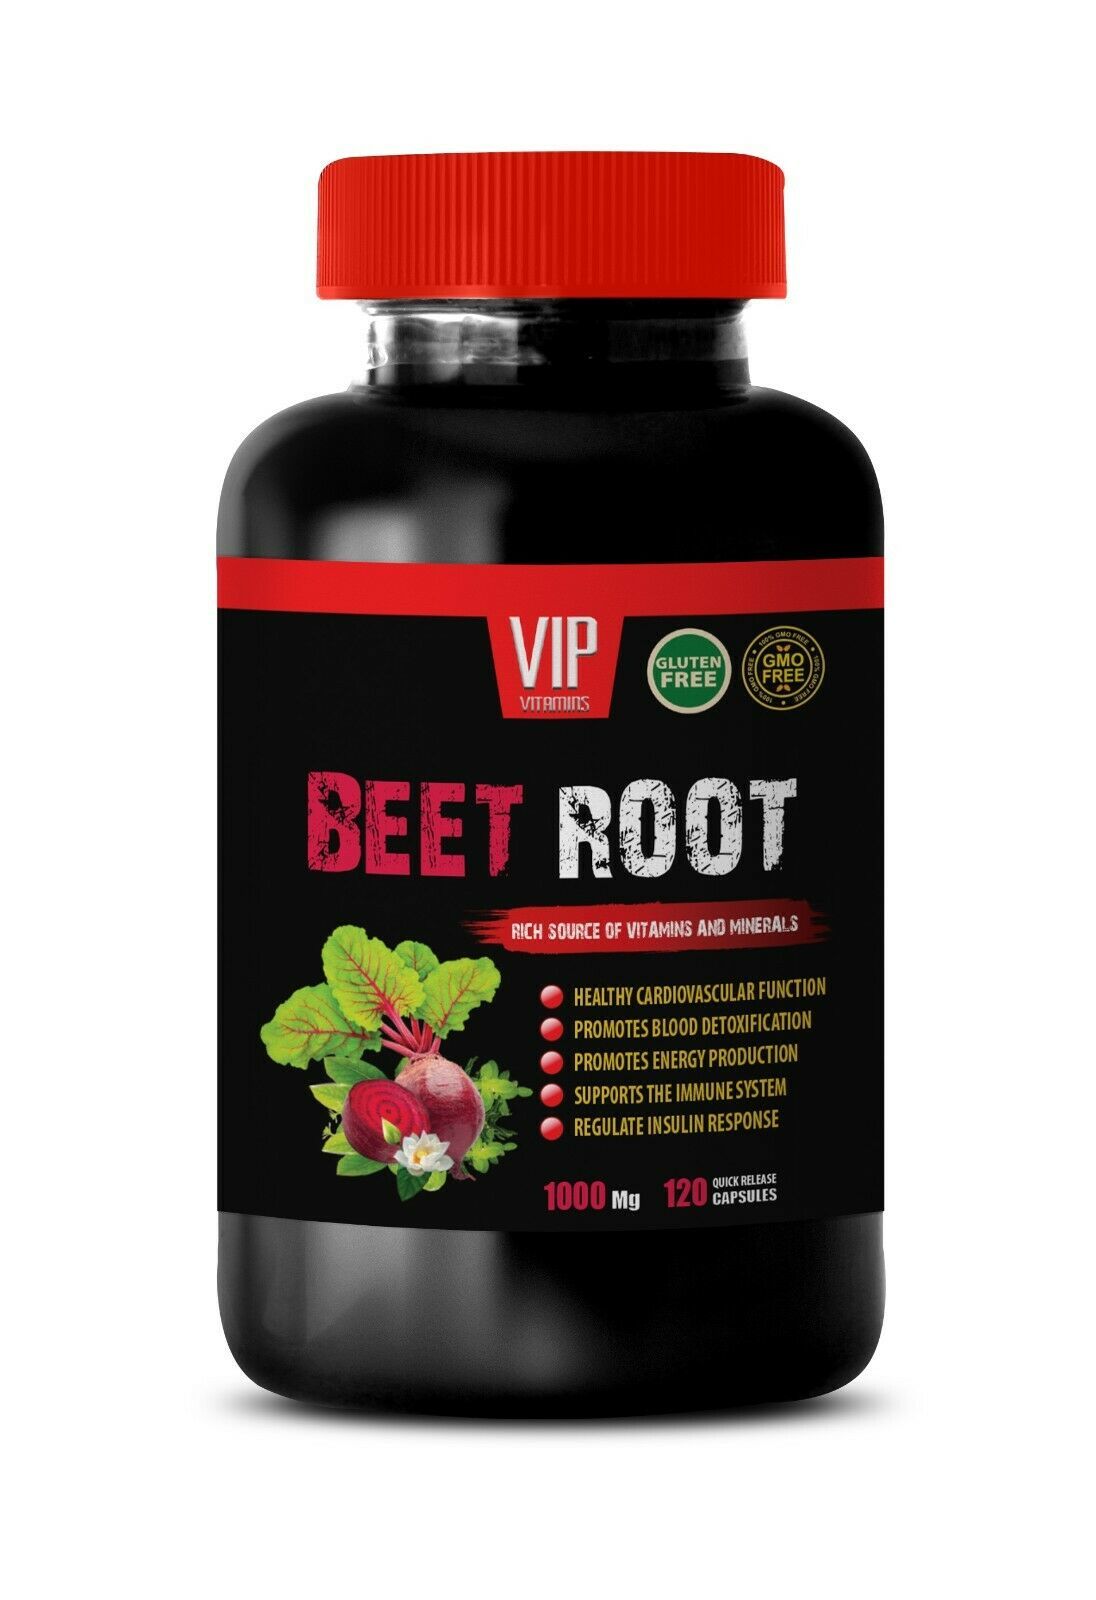 blood pressure down naturally - beet root - brain supplement 1 bottle